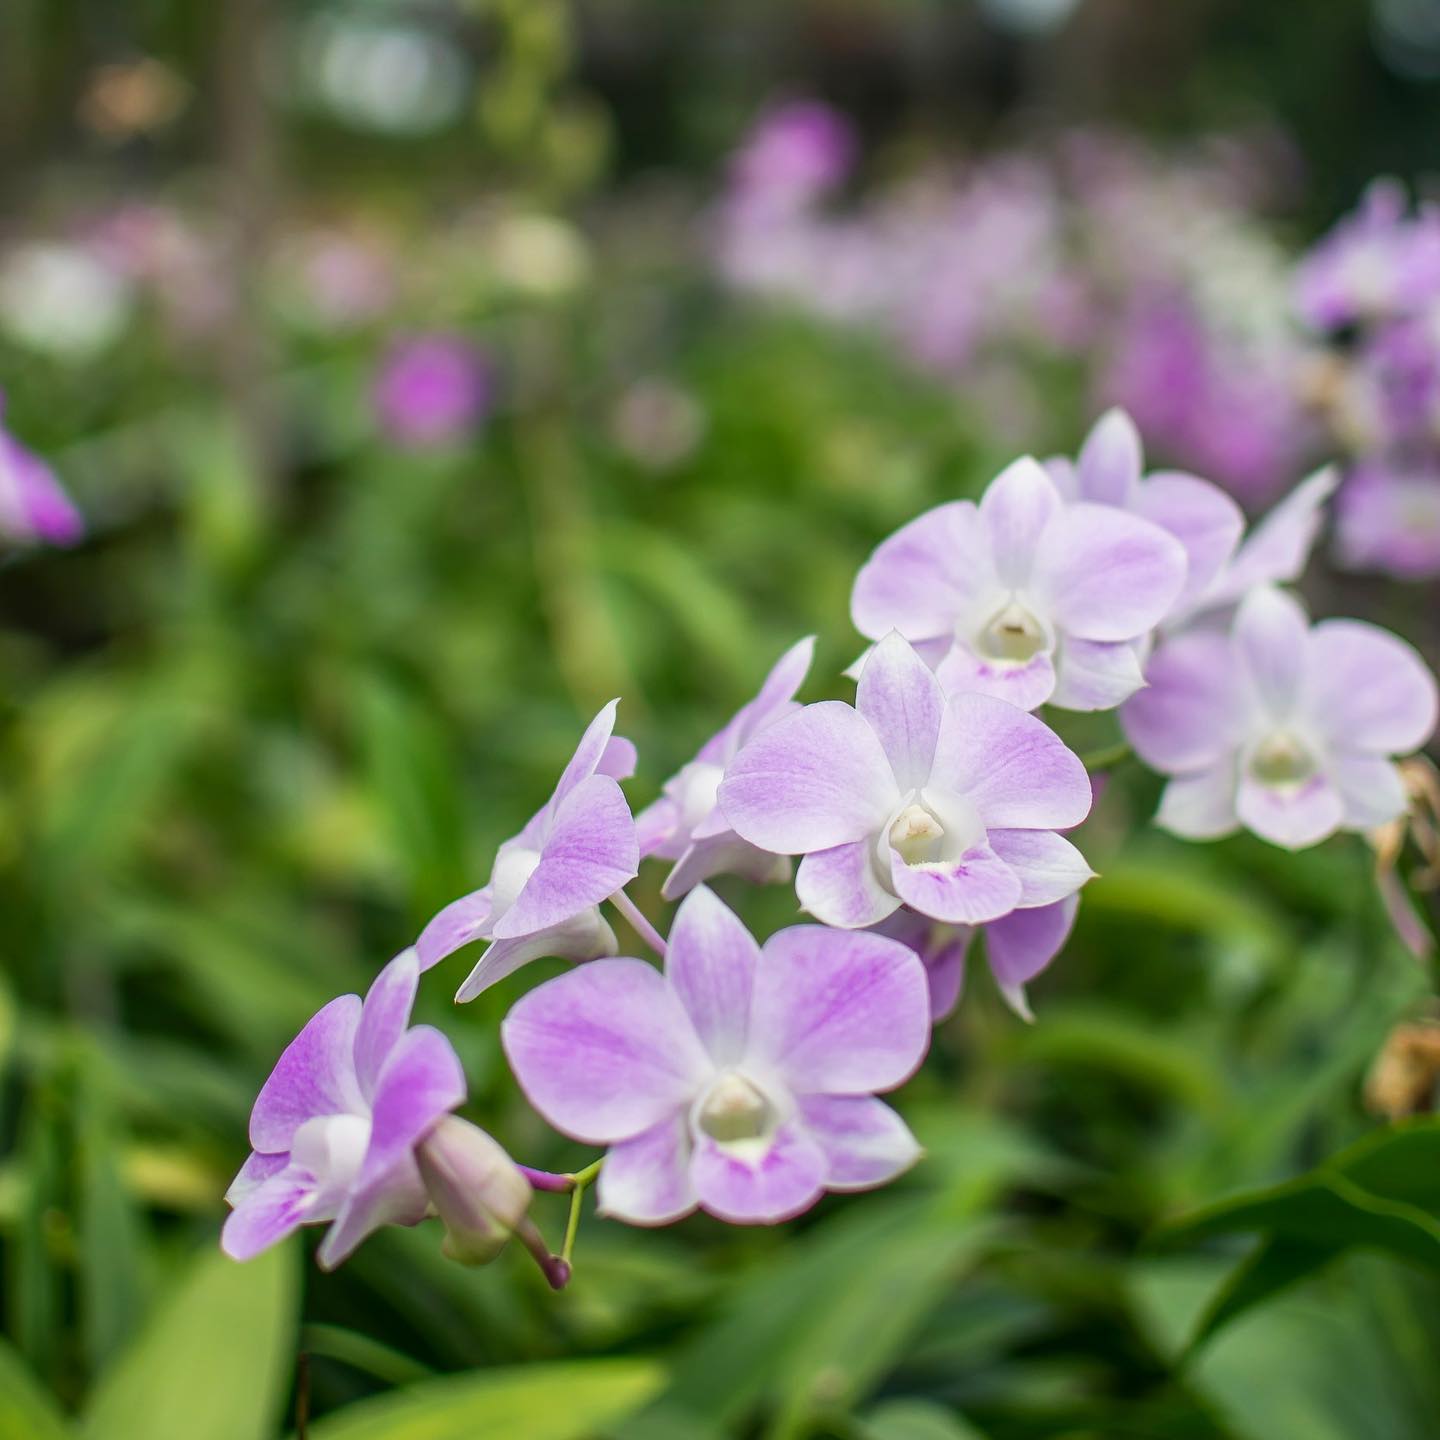 50 Natural Blush Pink Orchid Loose Bloom Fresh Cut Flowers Bundle Build A Box